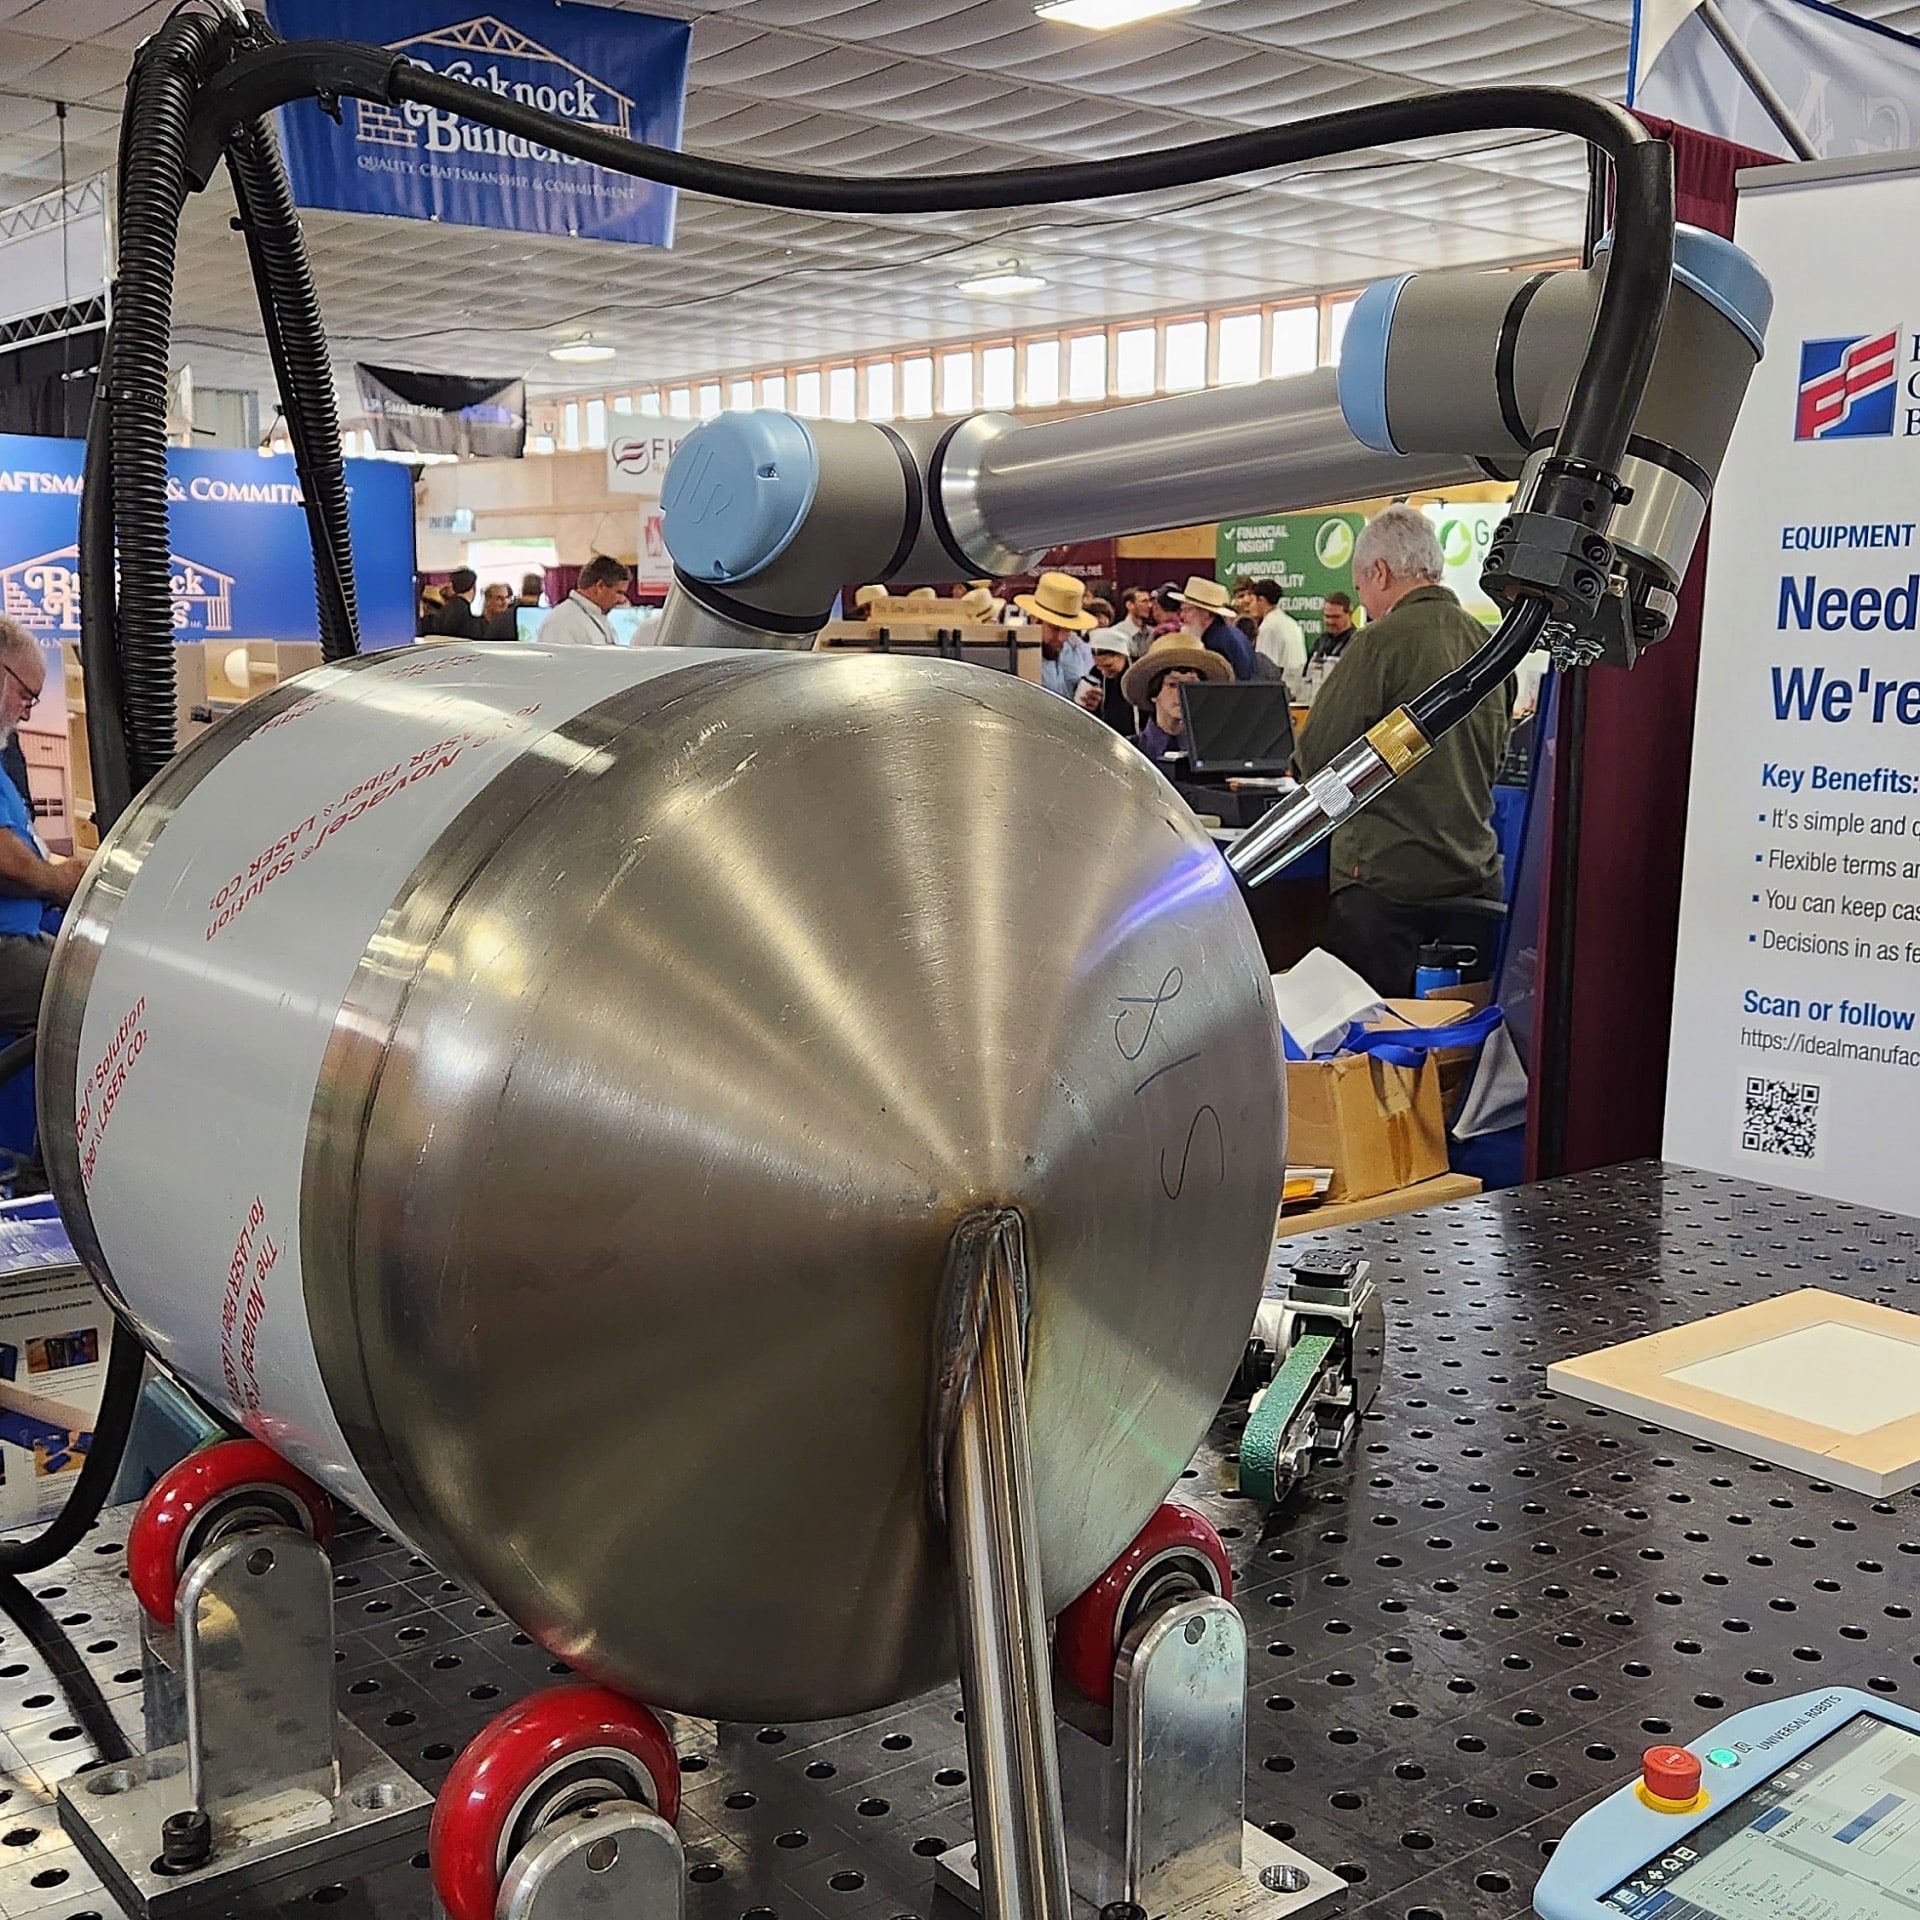 robot-welding-arm-in-manufacturing-ideal-machine-penn-lancaster-robotics